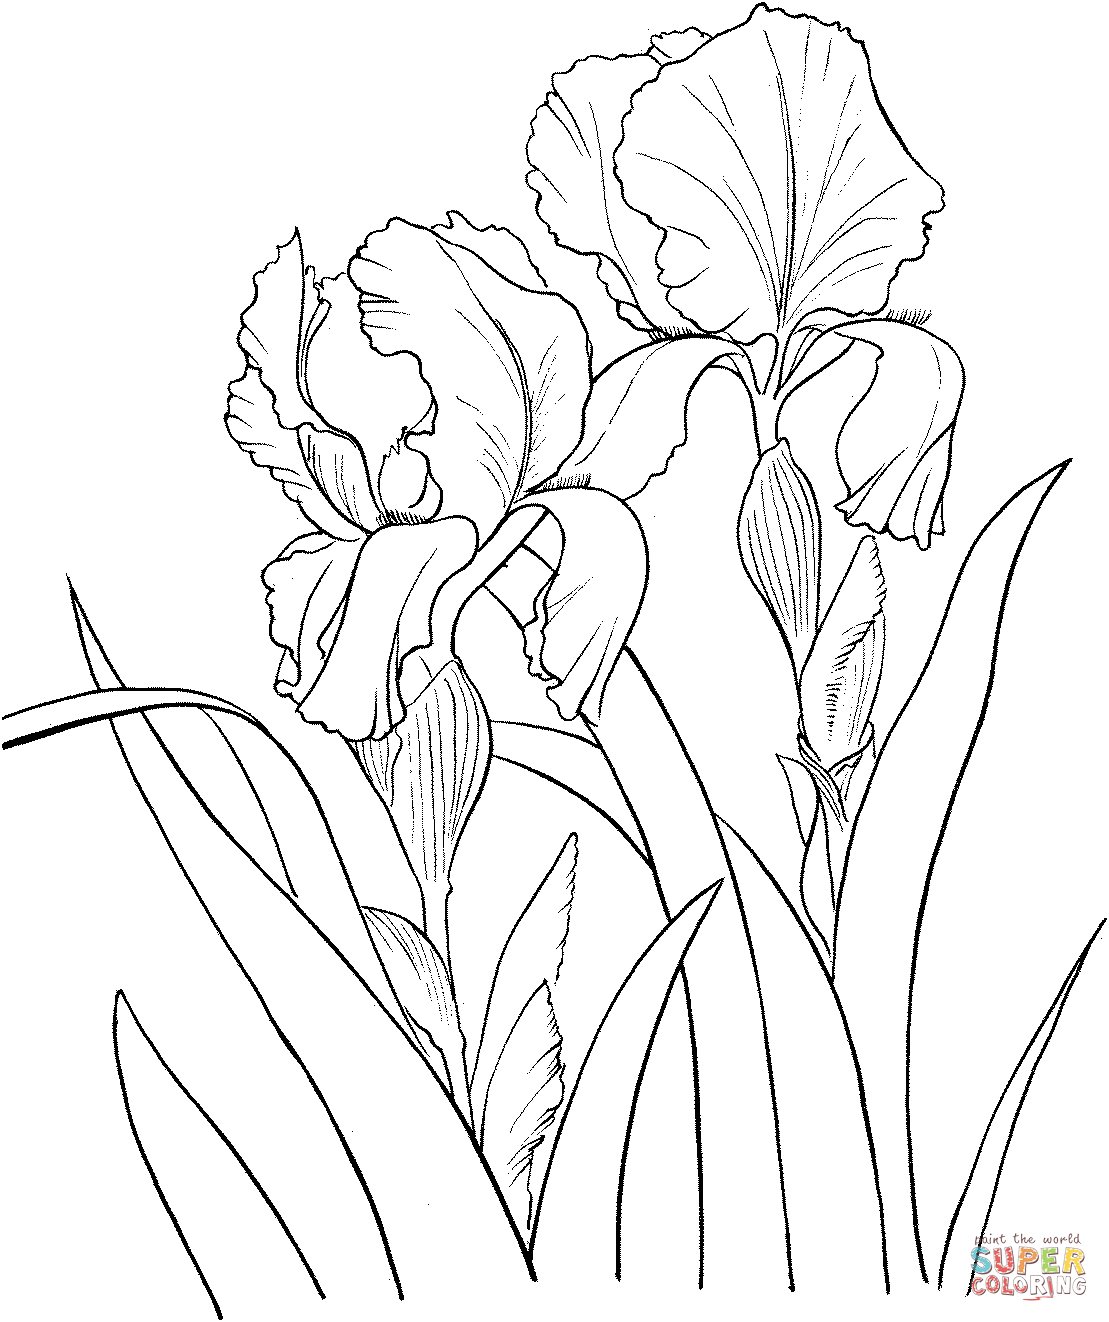 Garden German Iris or Iris Germanica Coloring Pages